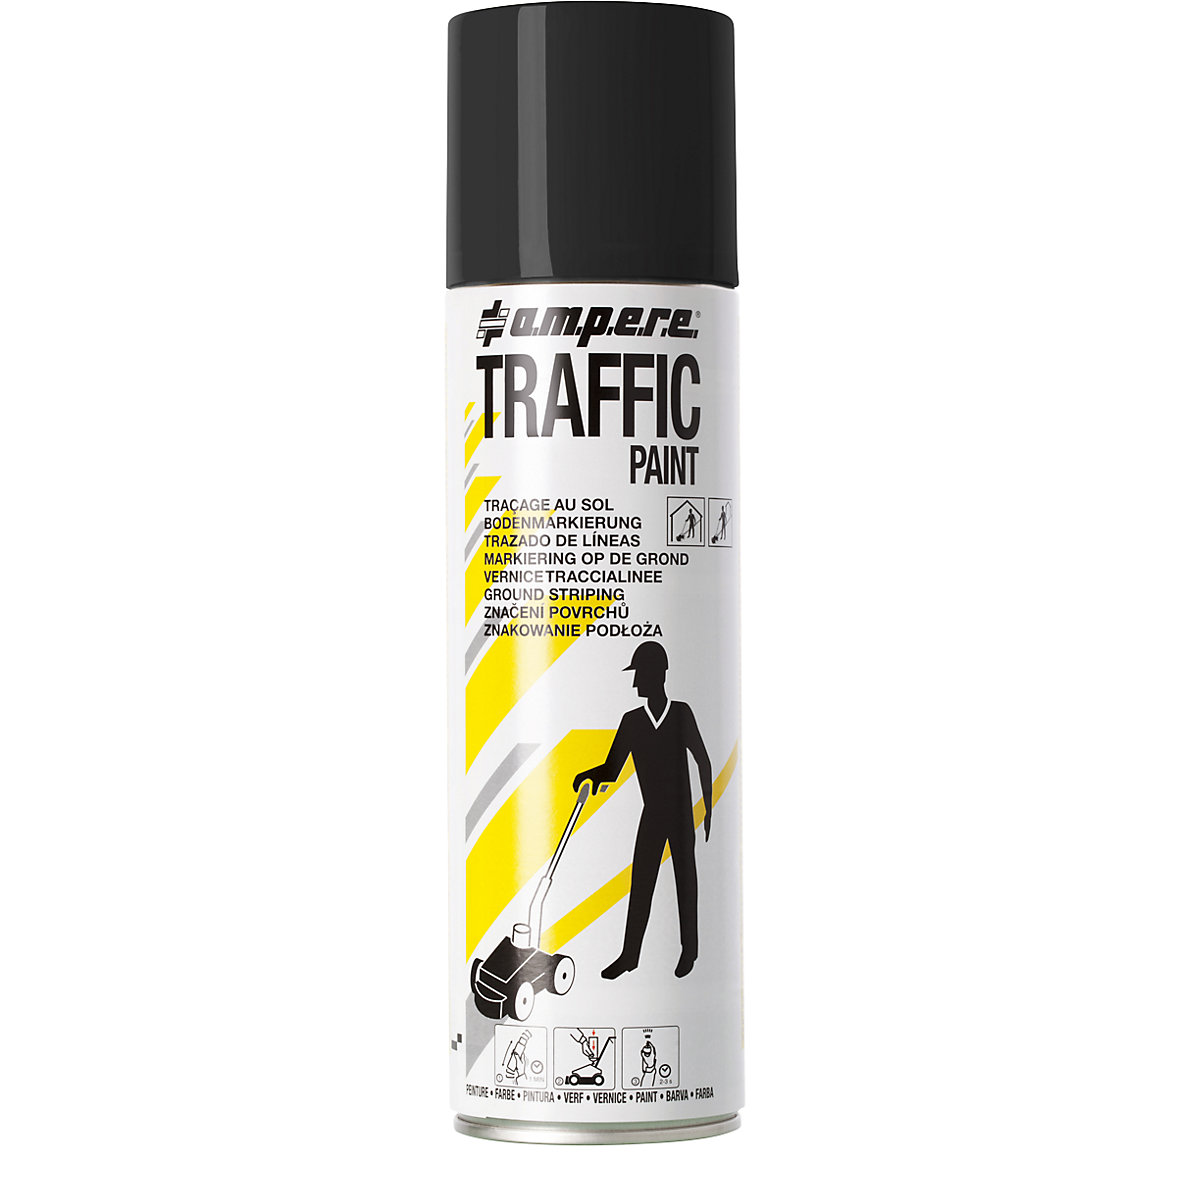 Tinta de marcação Traffic Paint® – Ampere, volume 500 ml, embalagem 12 latas, preto-3